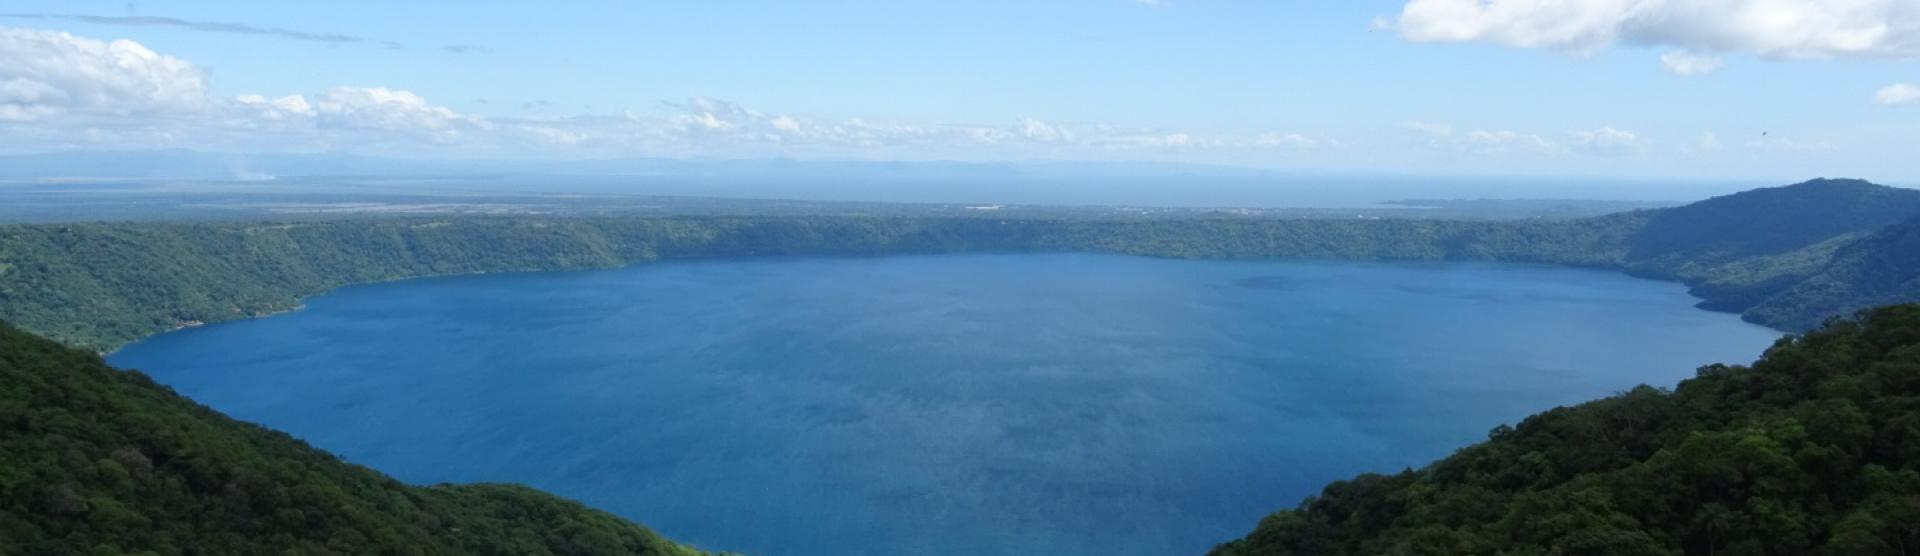 Laguna de Apoyo, Nicaragua